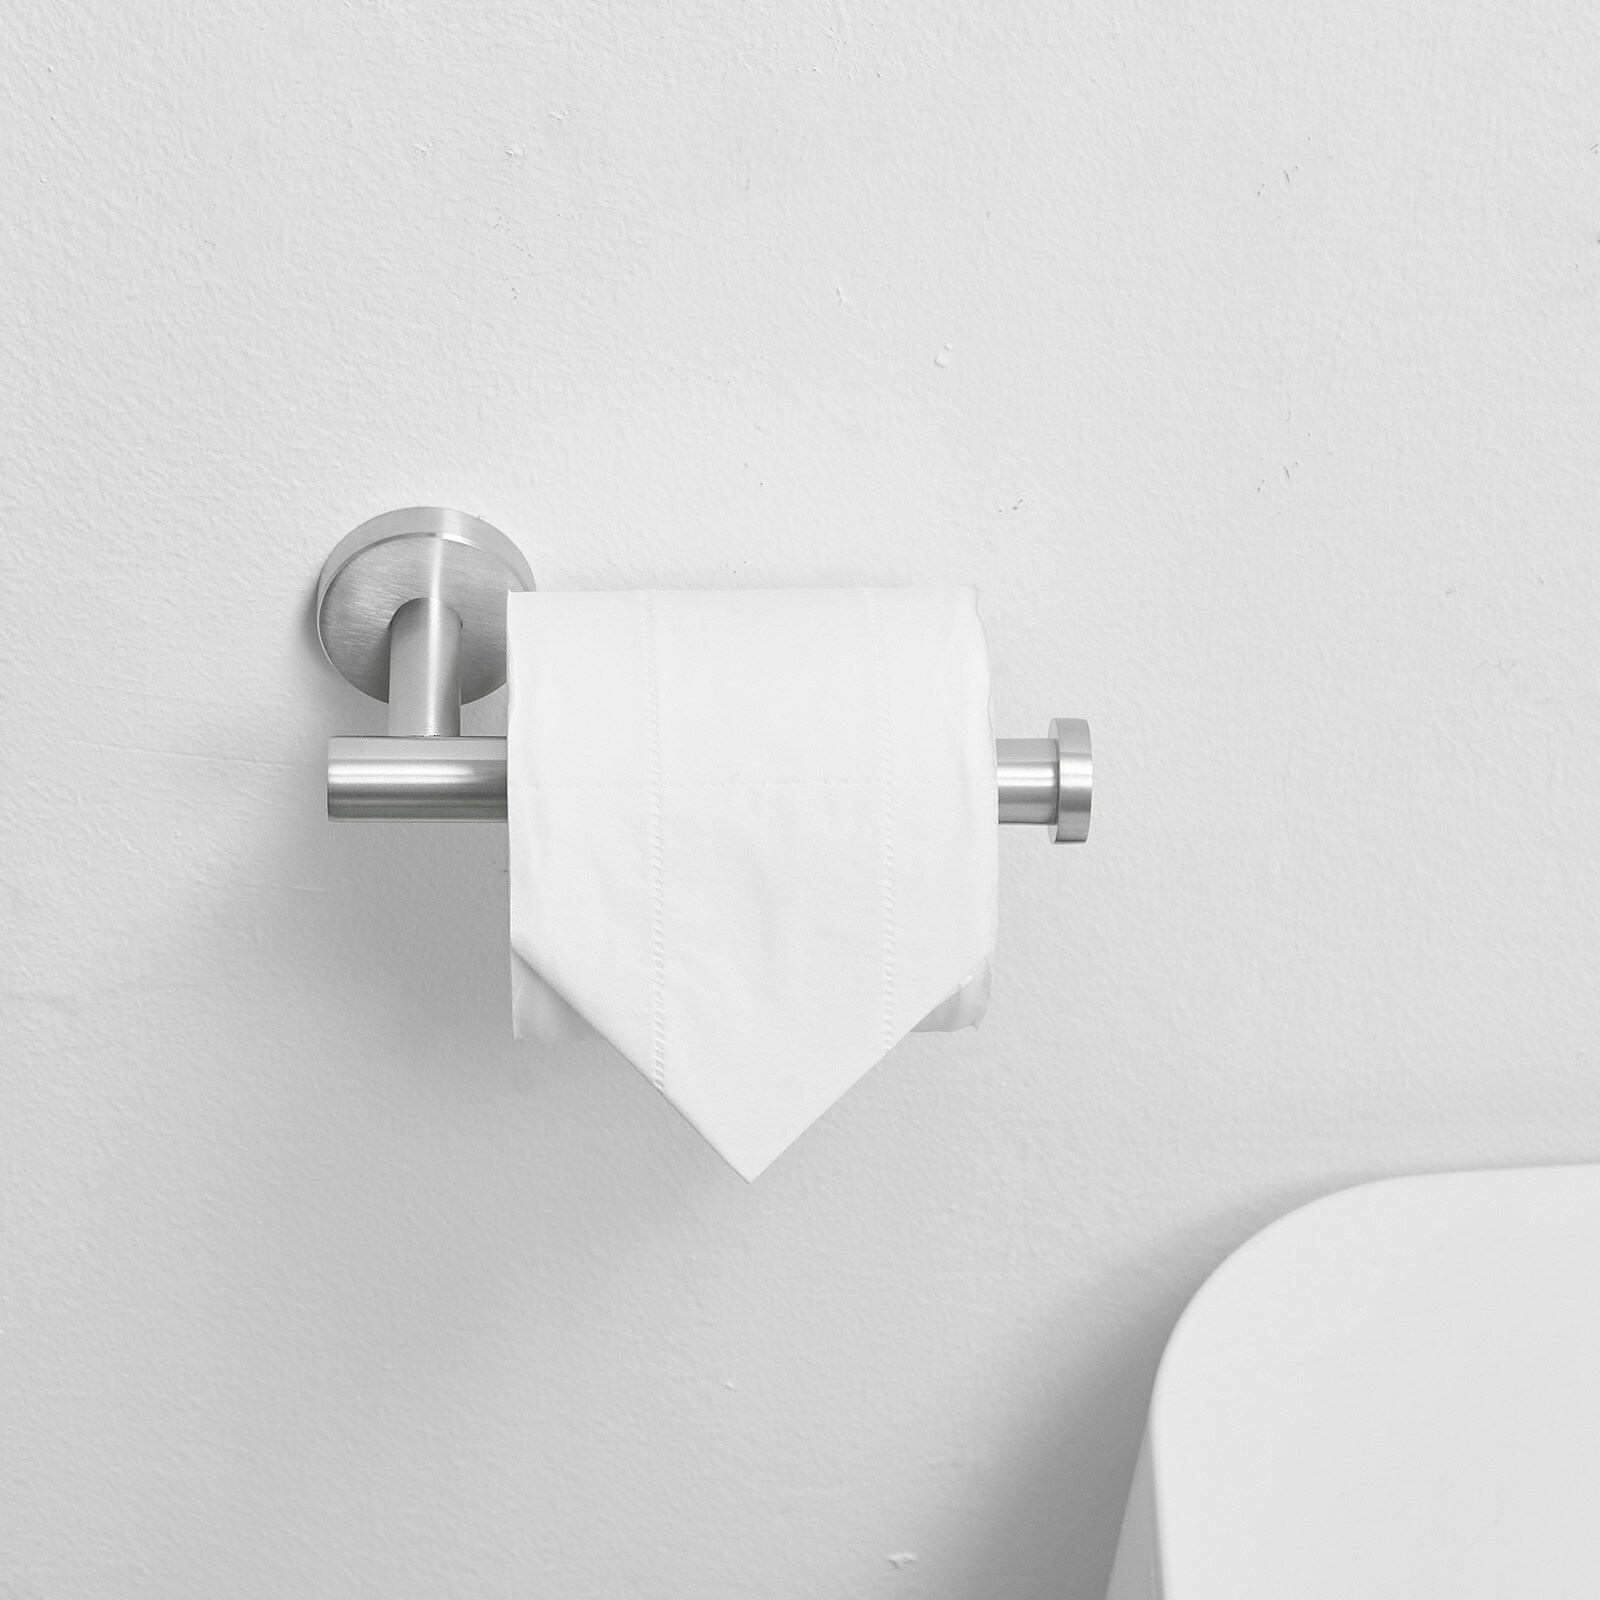 Bathroom Toilet Paper Holder Stand Modern Tissue Roll Holder SUS304  Stainless Steel Rustproof Freestanding Pedestal Matte